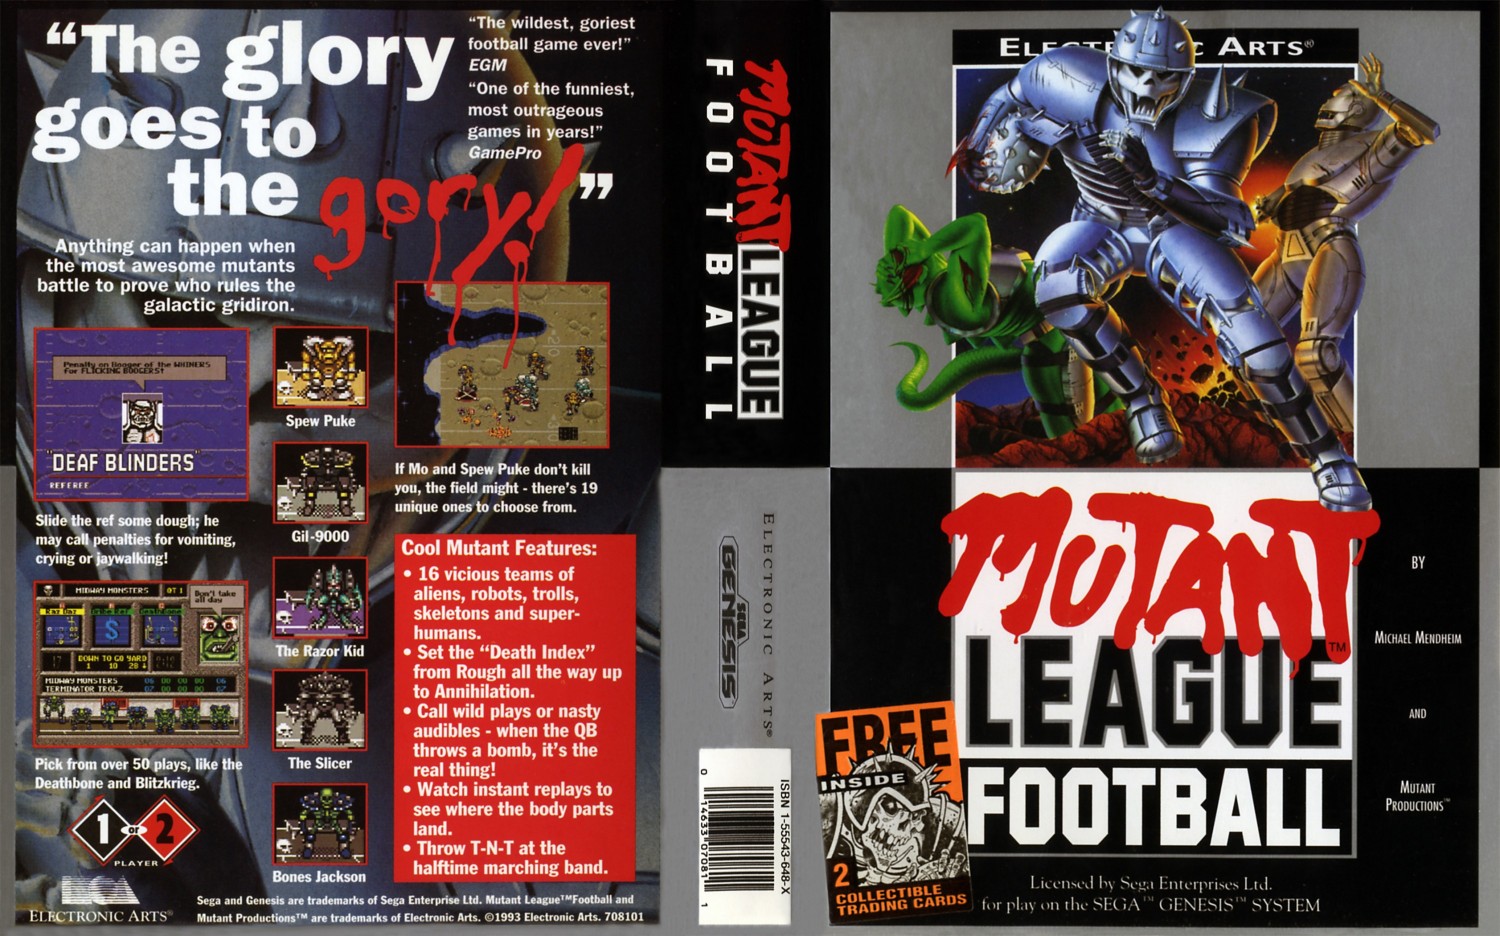 Mutant+League+Football.jpg